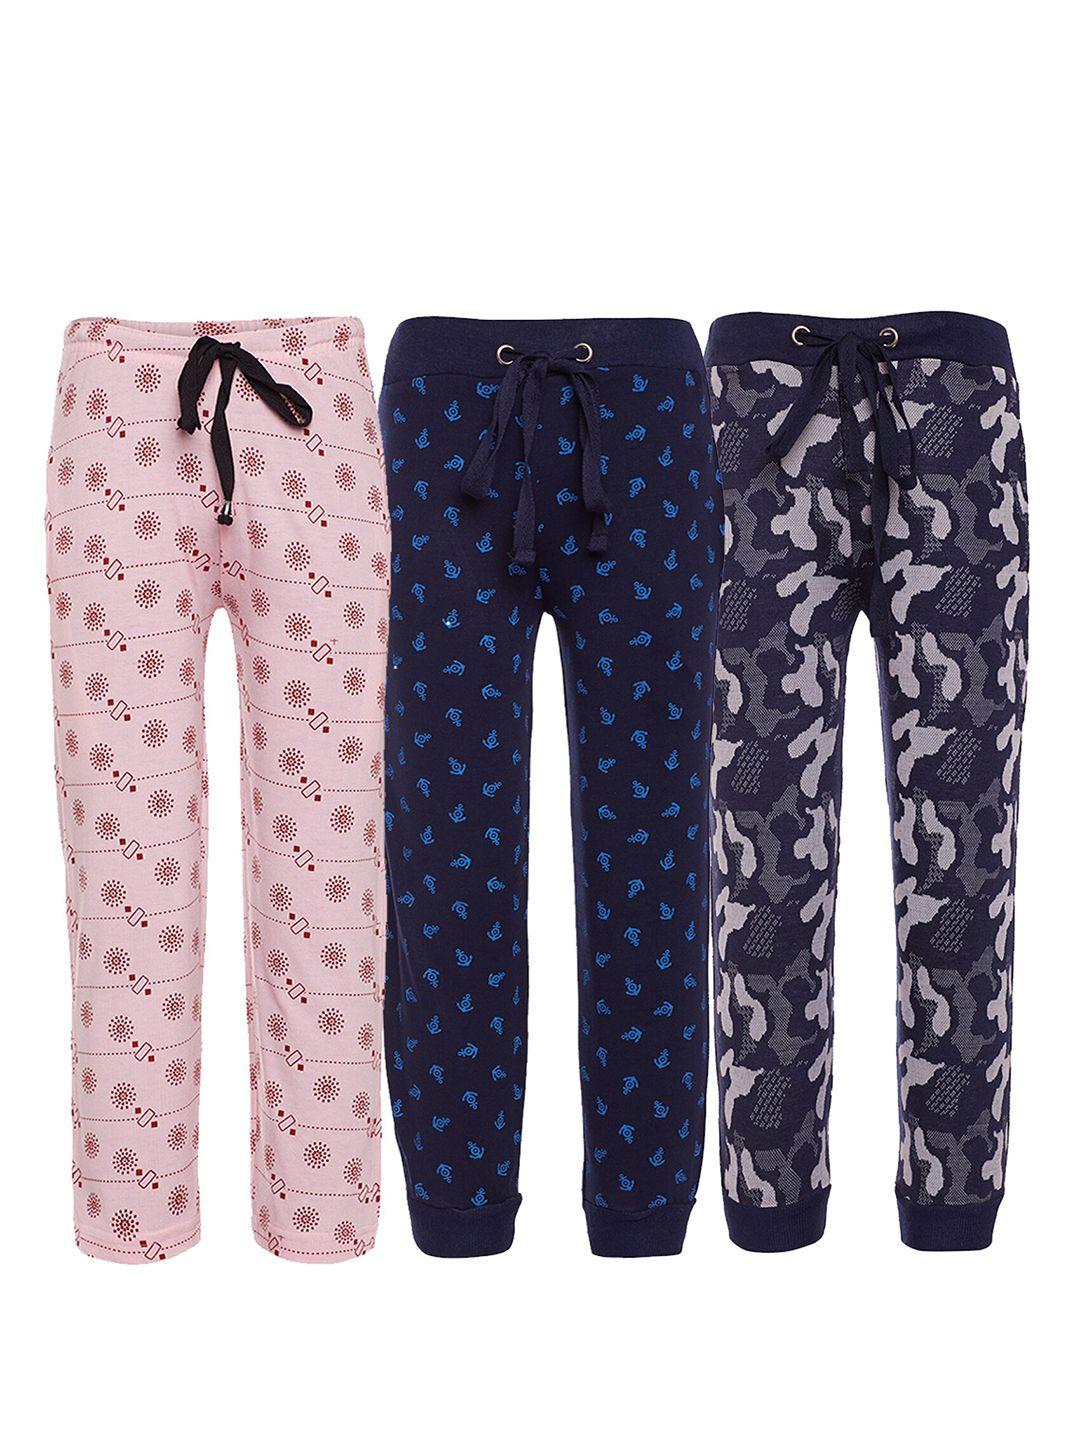 vimal jonney women pack of 3 pink & navy blue cotton printed track pants